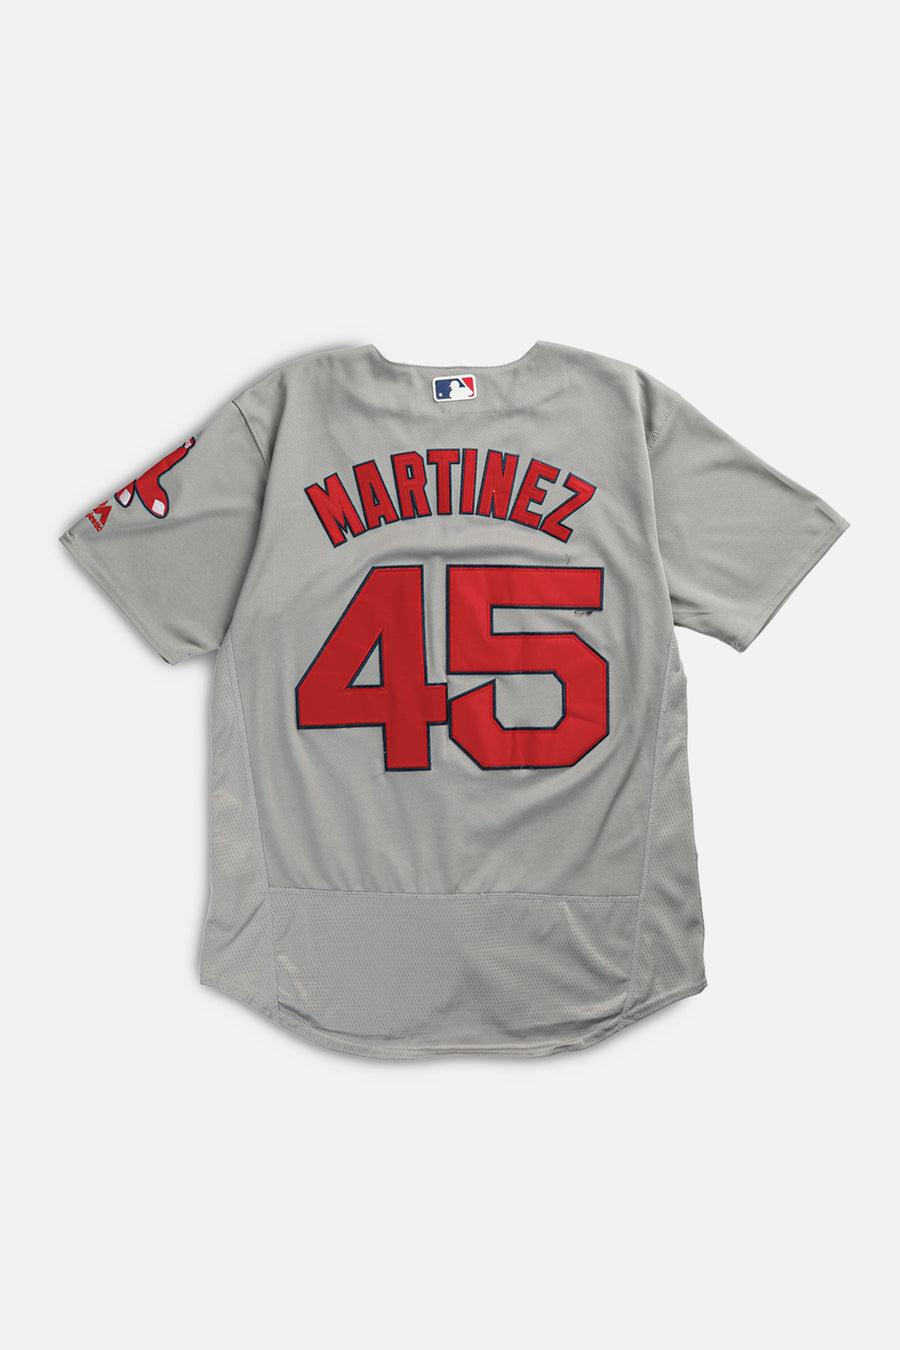 Vintage Boston Red Sox MLB Jersey - M